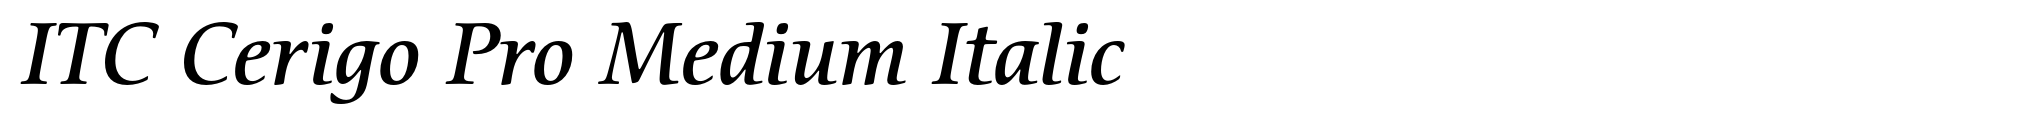 ITC Cerigo Pro Medium Italic image